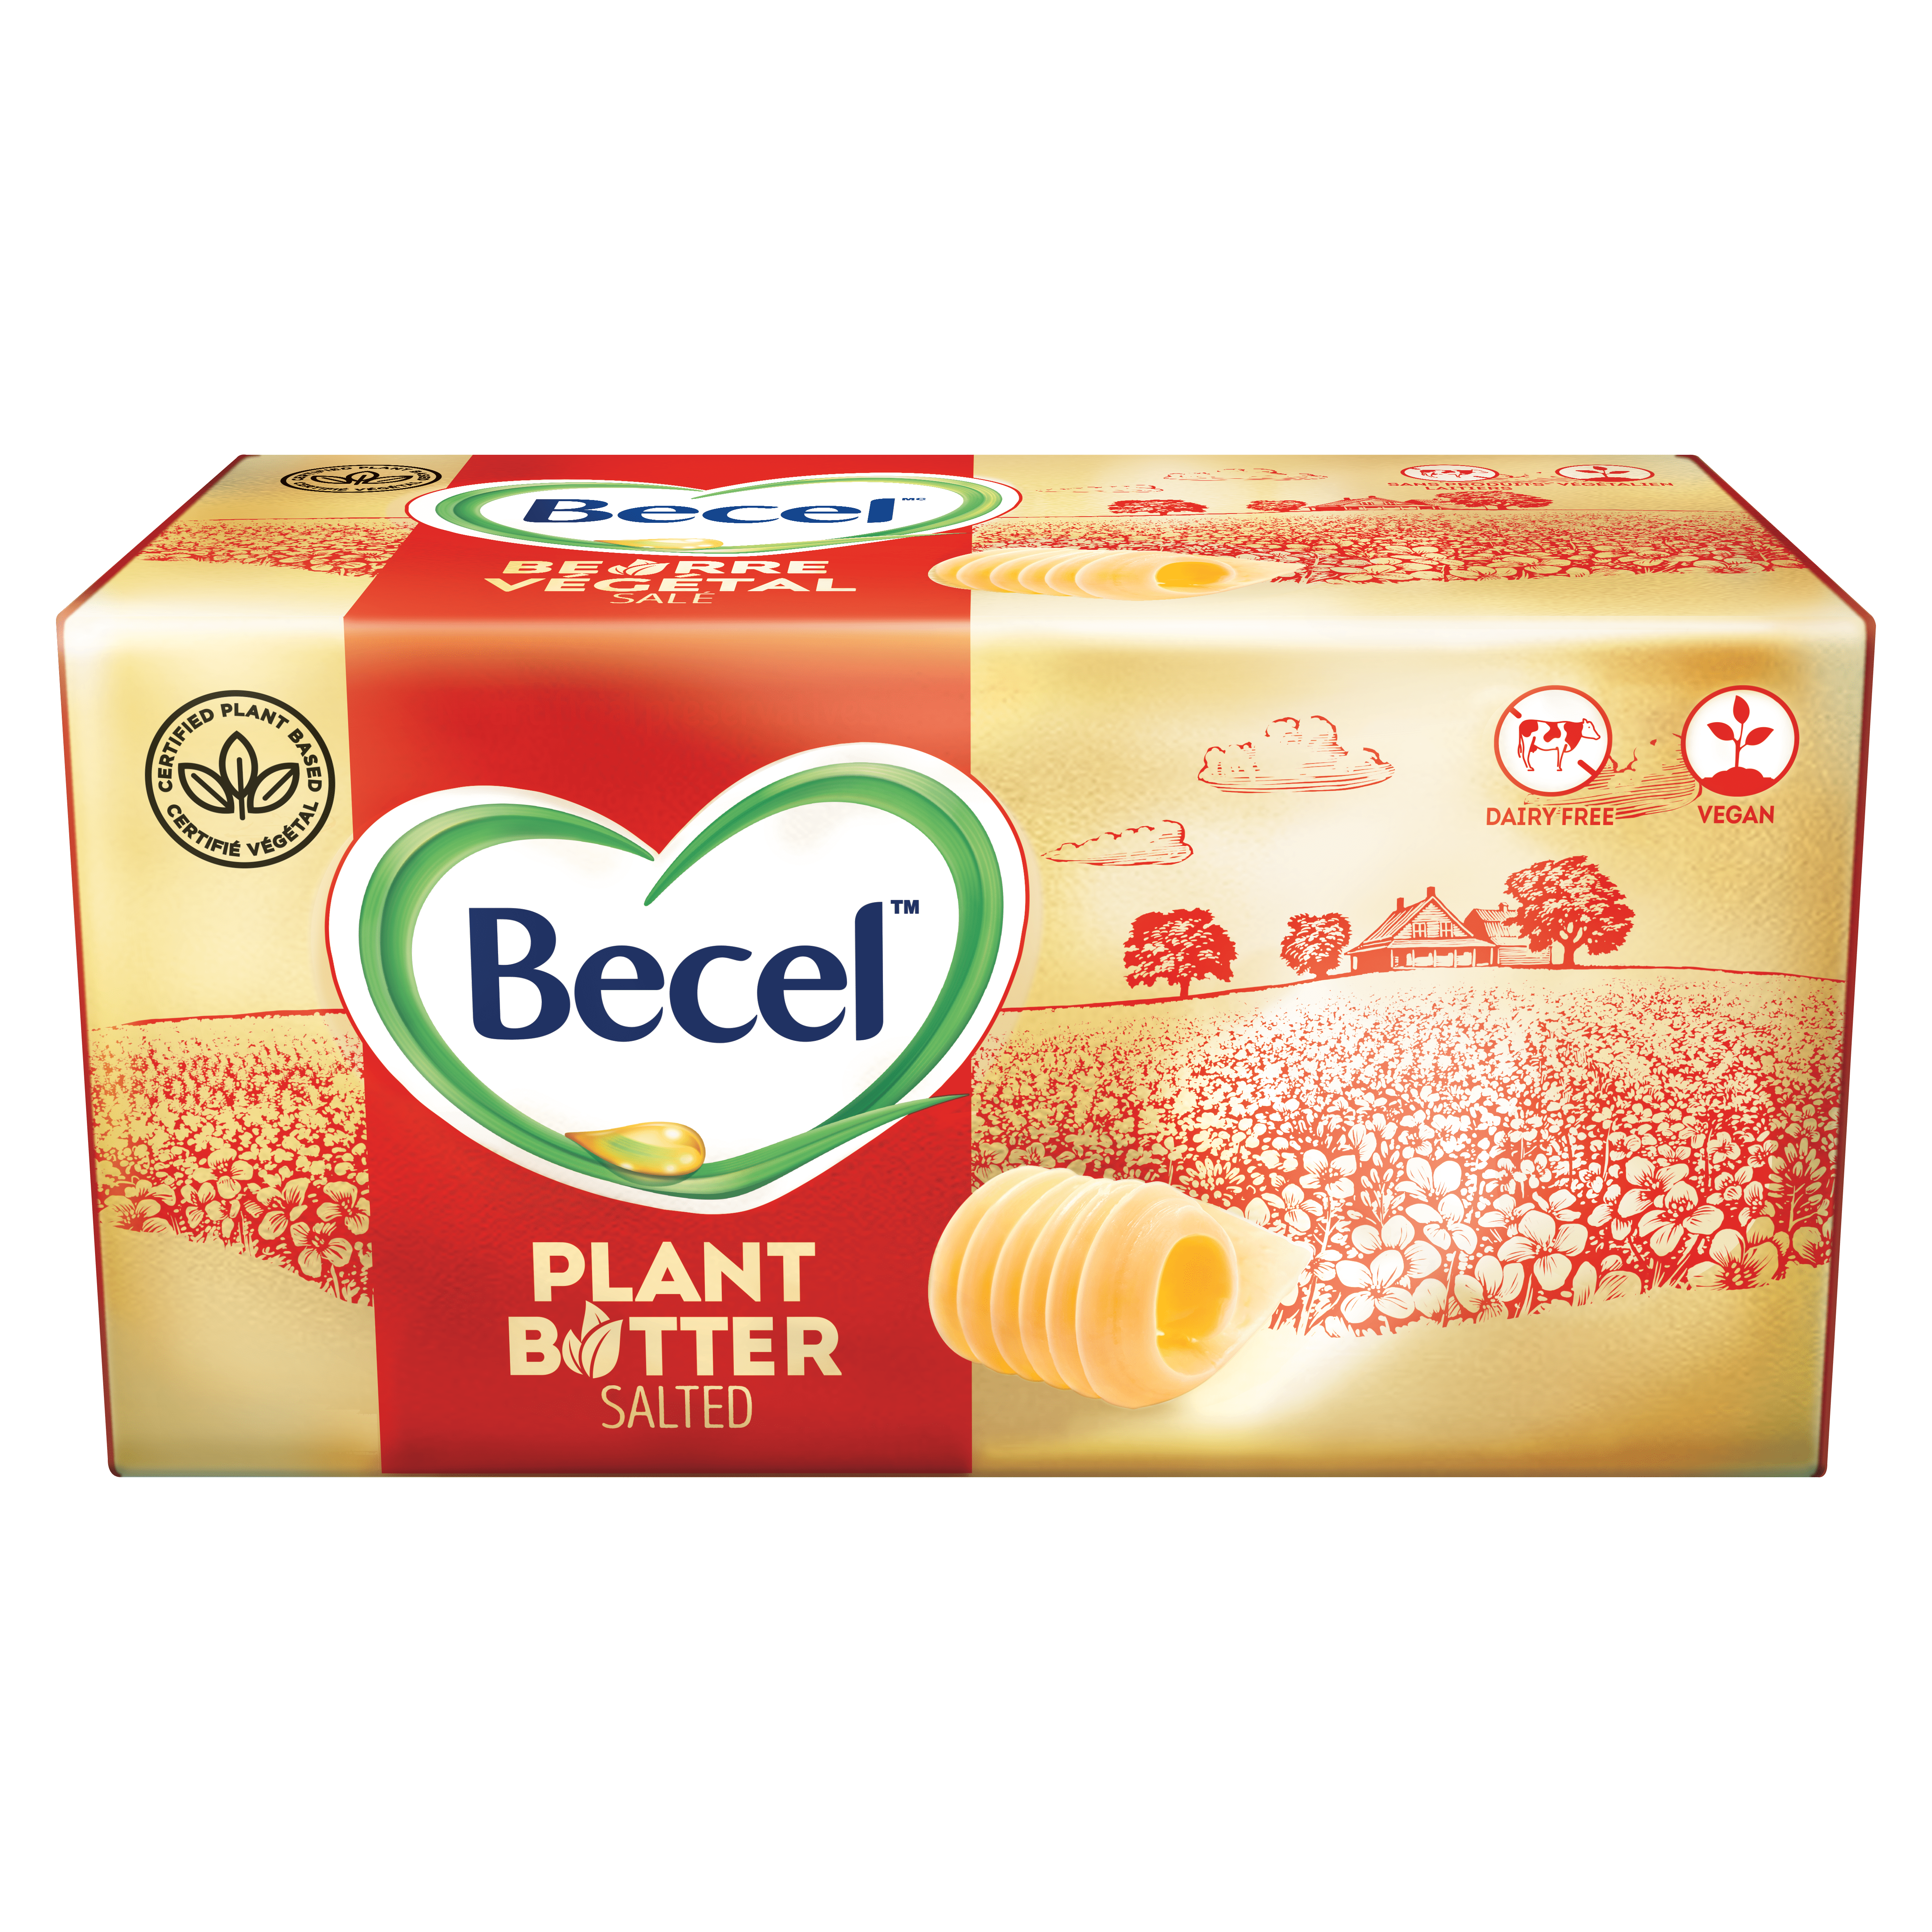 Becel Margarine Portion Cups